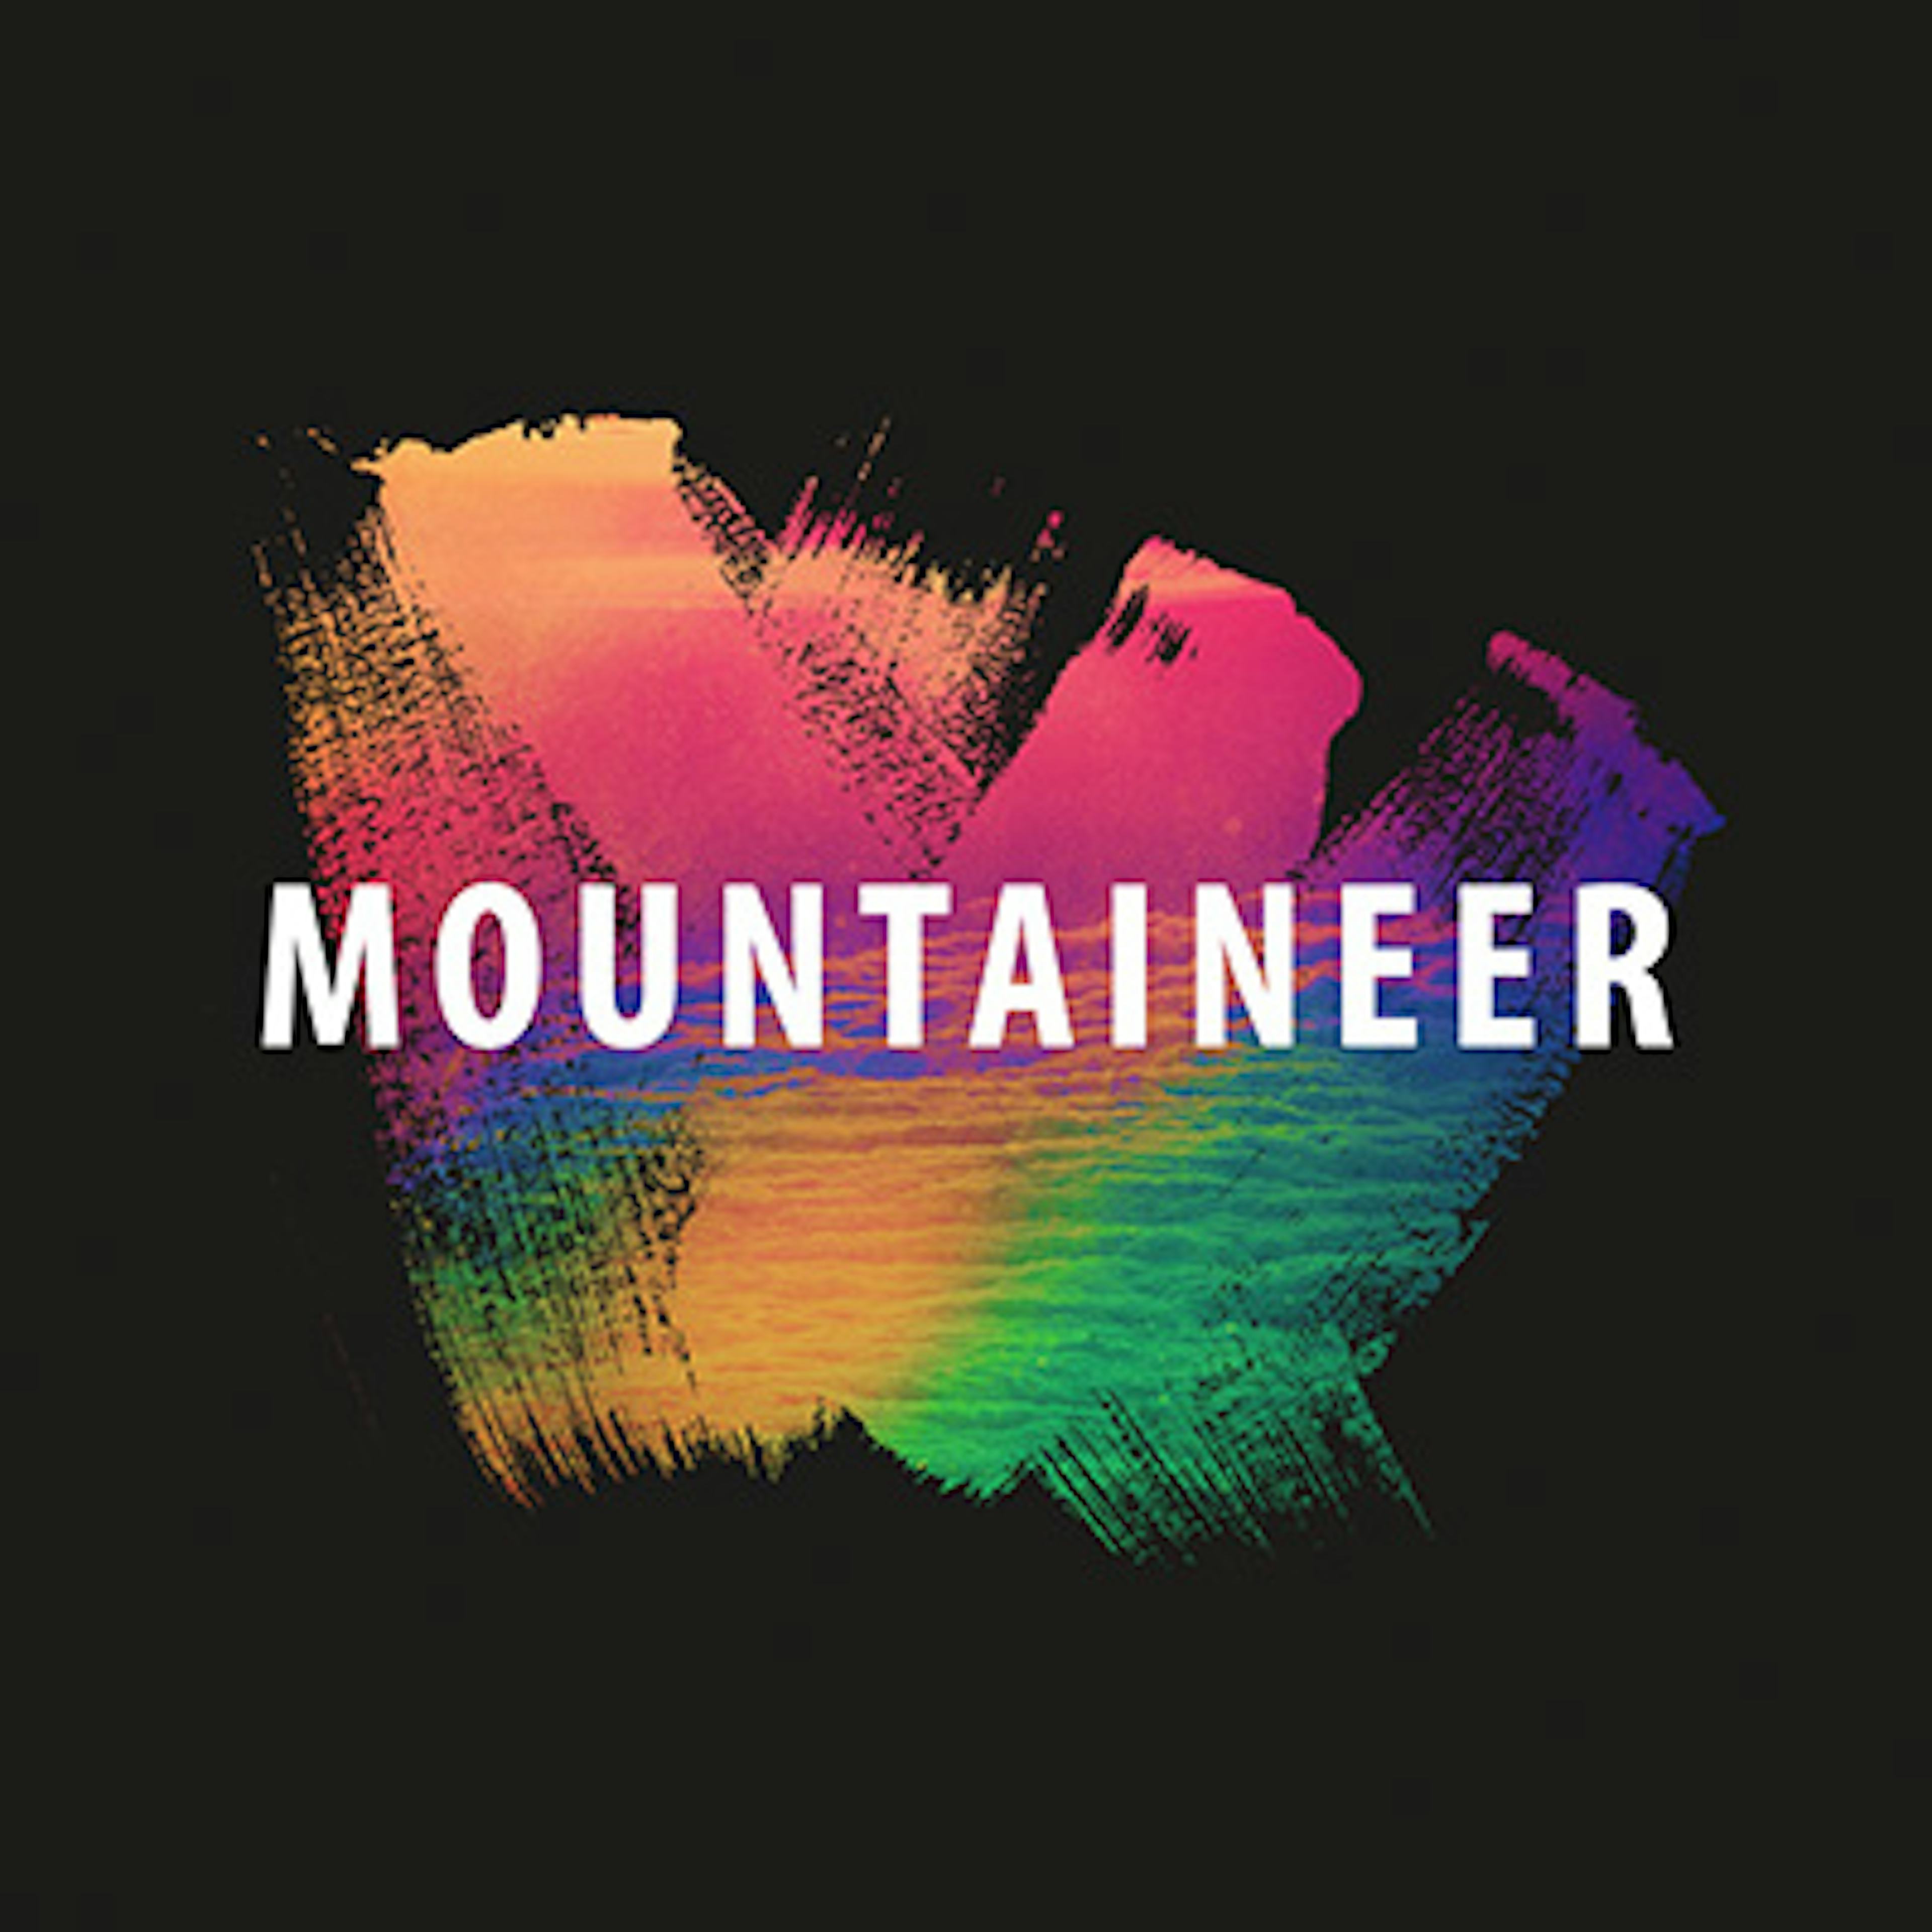 Mountaineer artwork